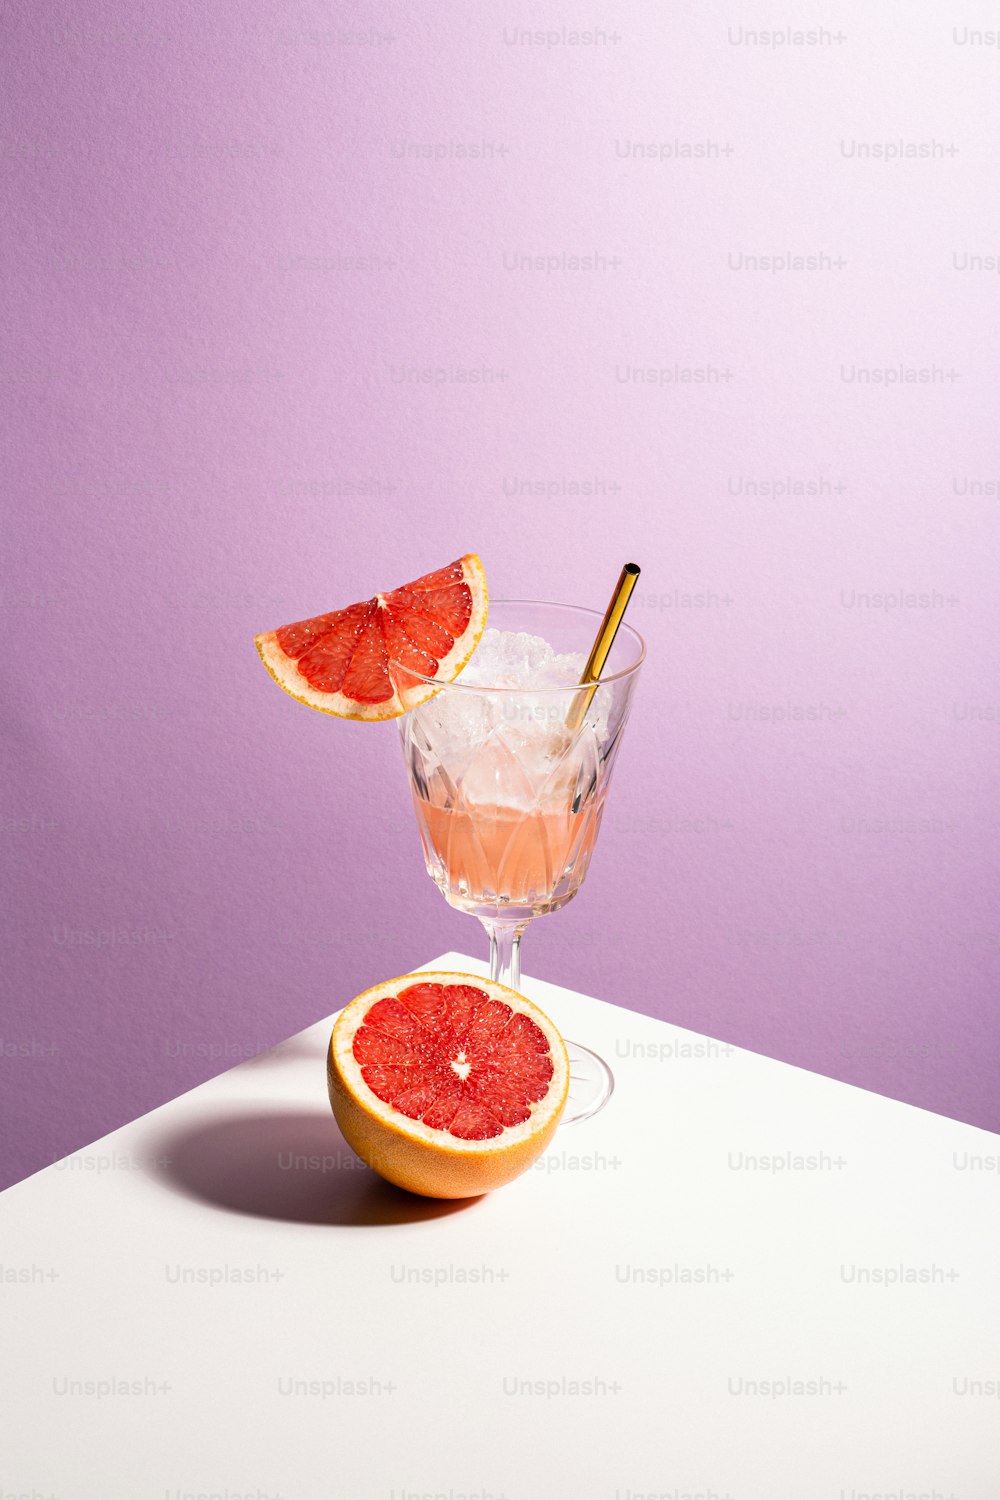 a grapefruit cocktail garnished with an orange slice